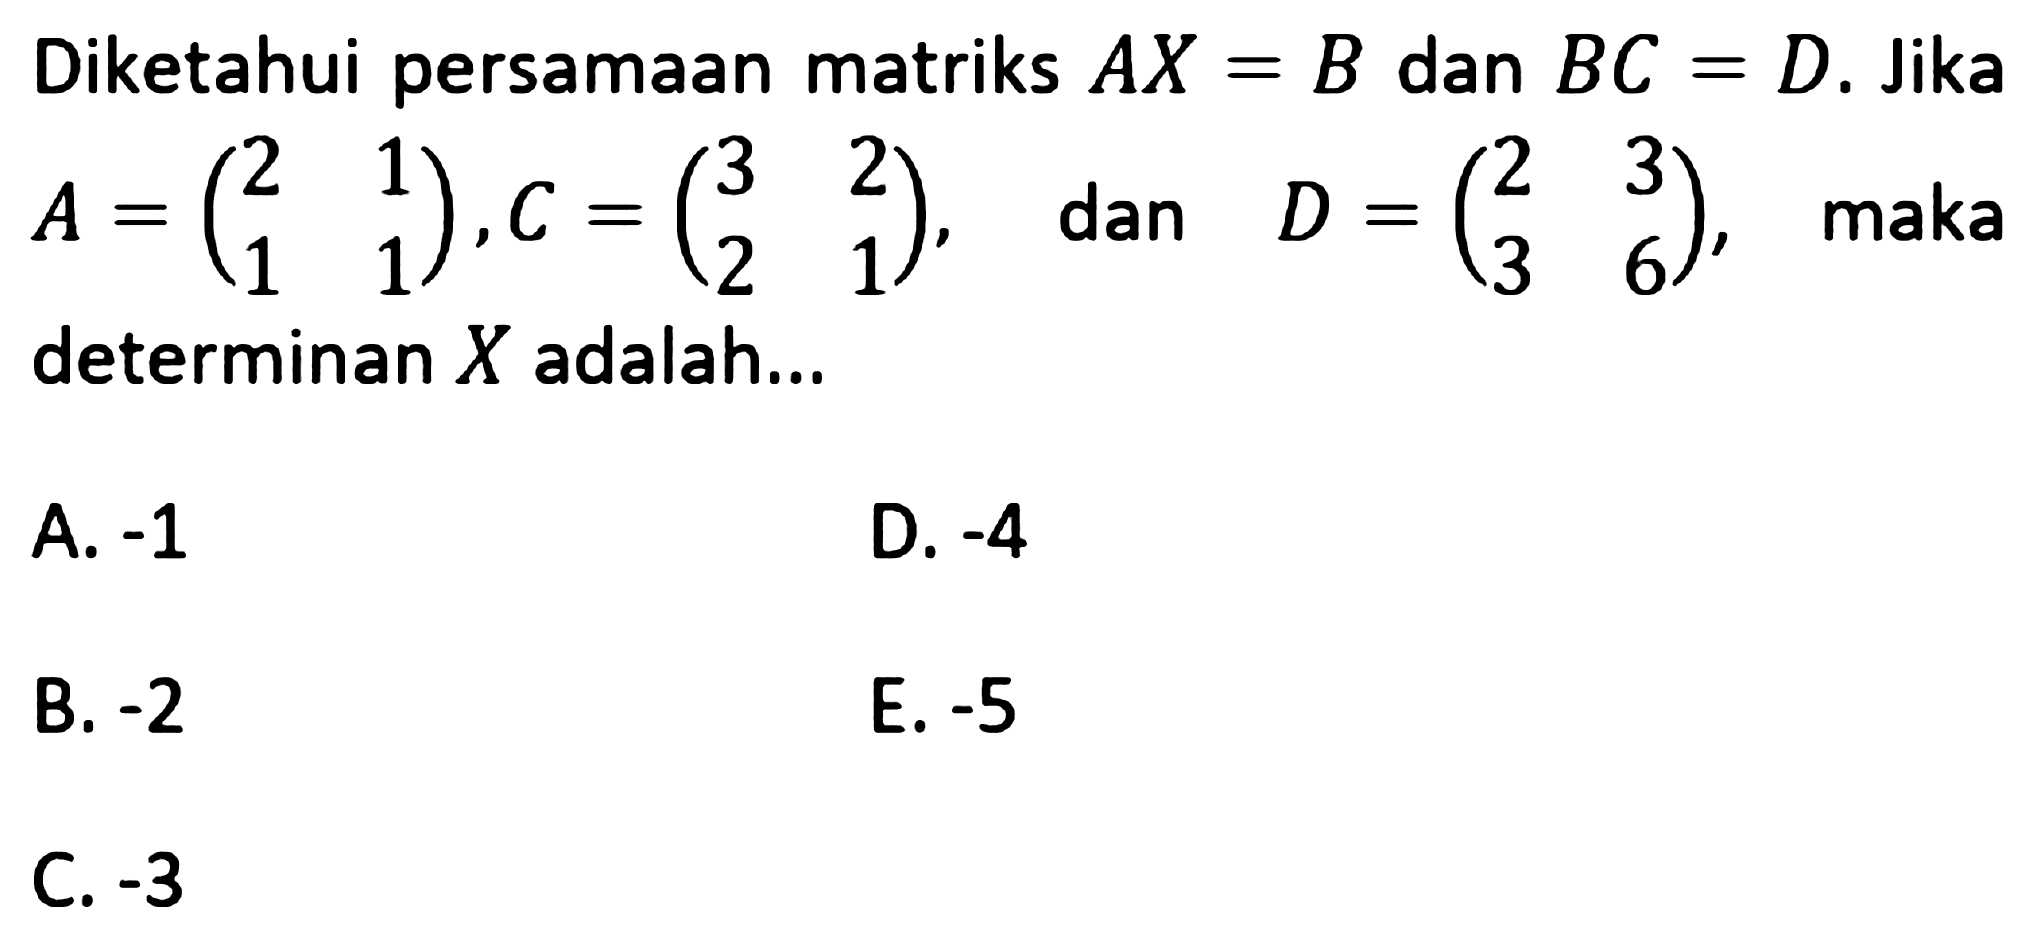 Diketahui persamaan matriks AX=B dan BC=D. Jika A=(2 1 1 1), C=(3 2 2 1), dan D=(2 3 3 6), maka determinan X adalah...